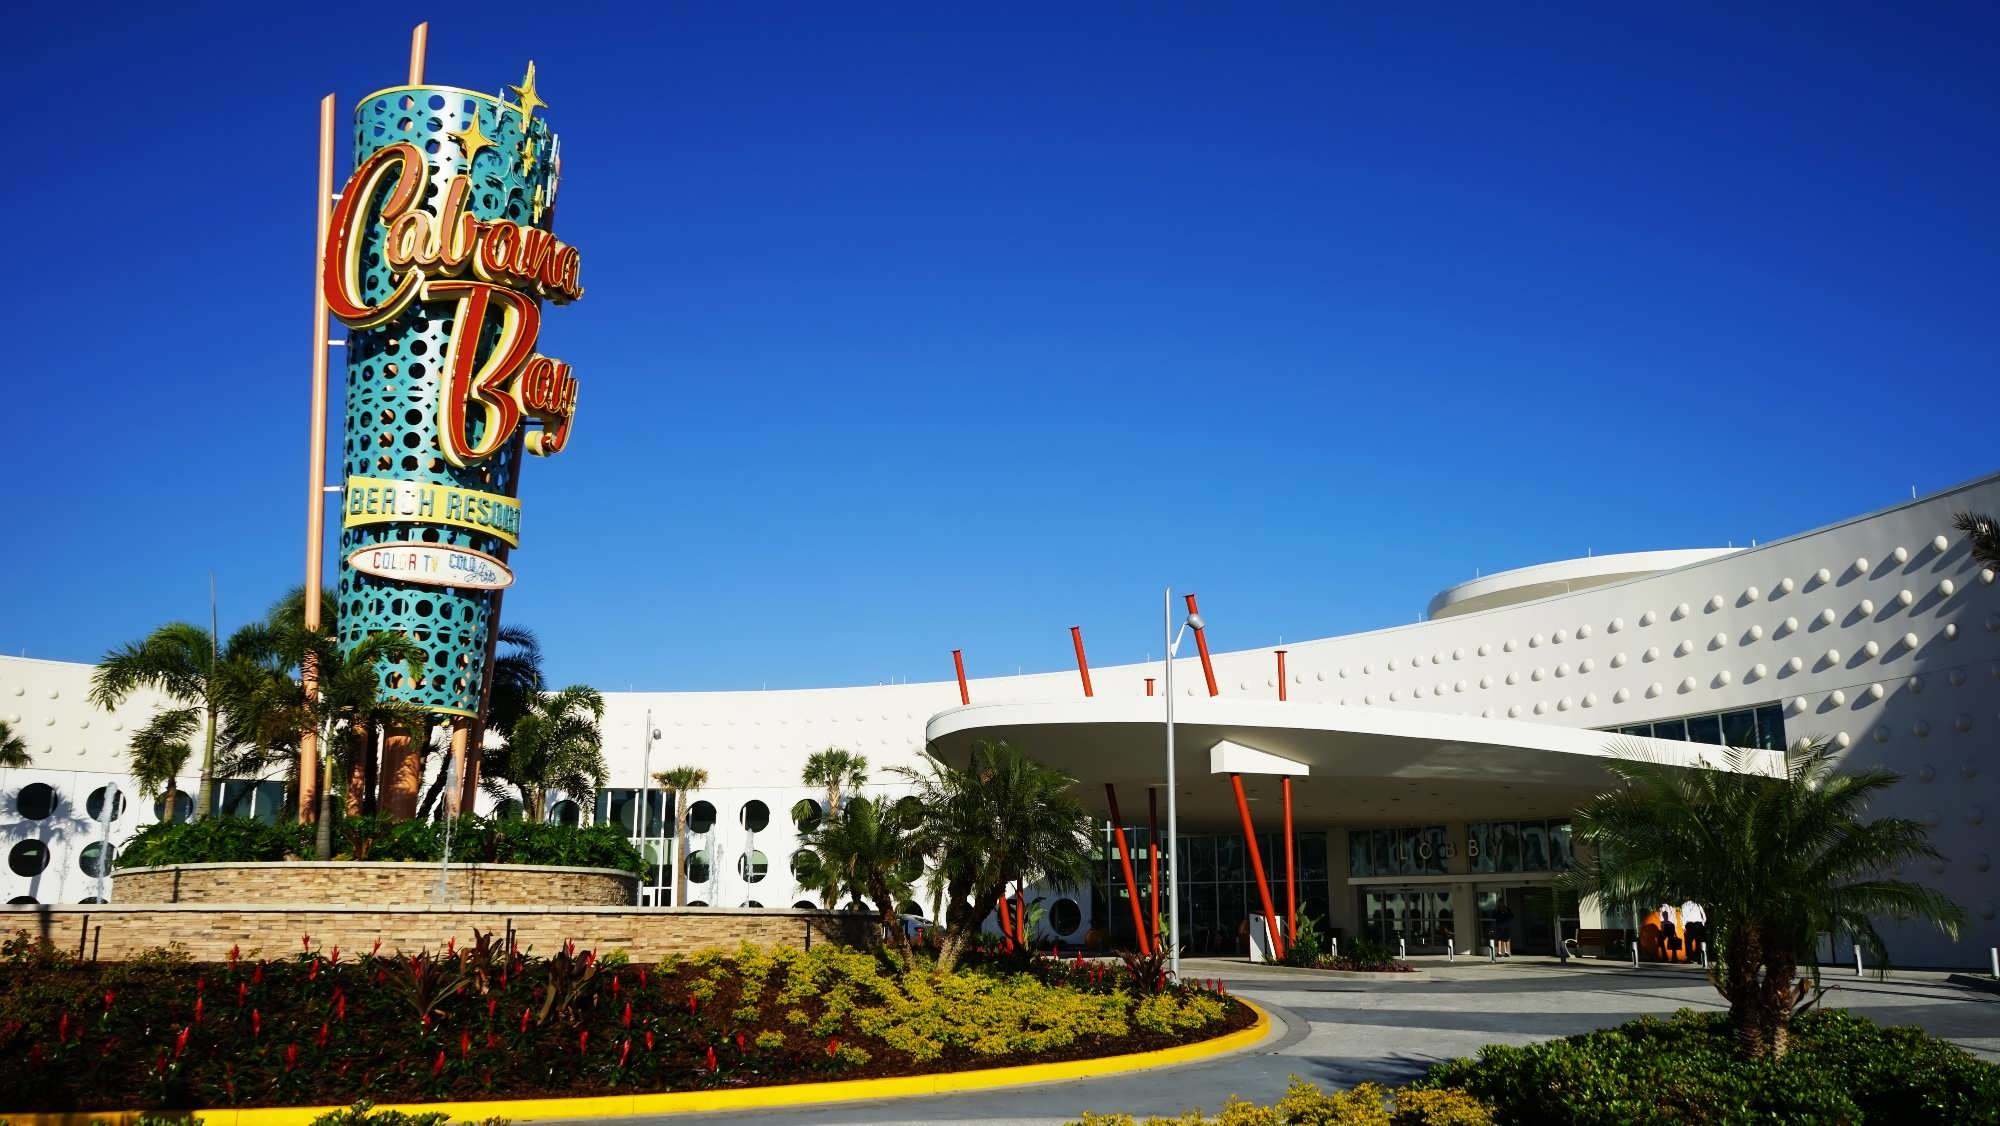 Why Cabana Bay Beach Resort is the best family resort in Orlando